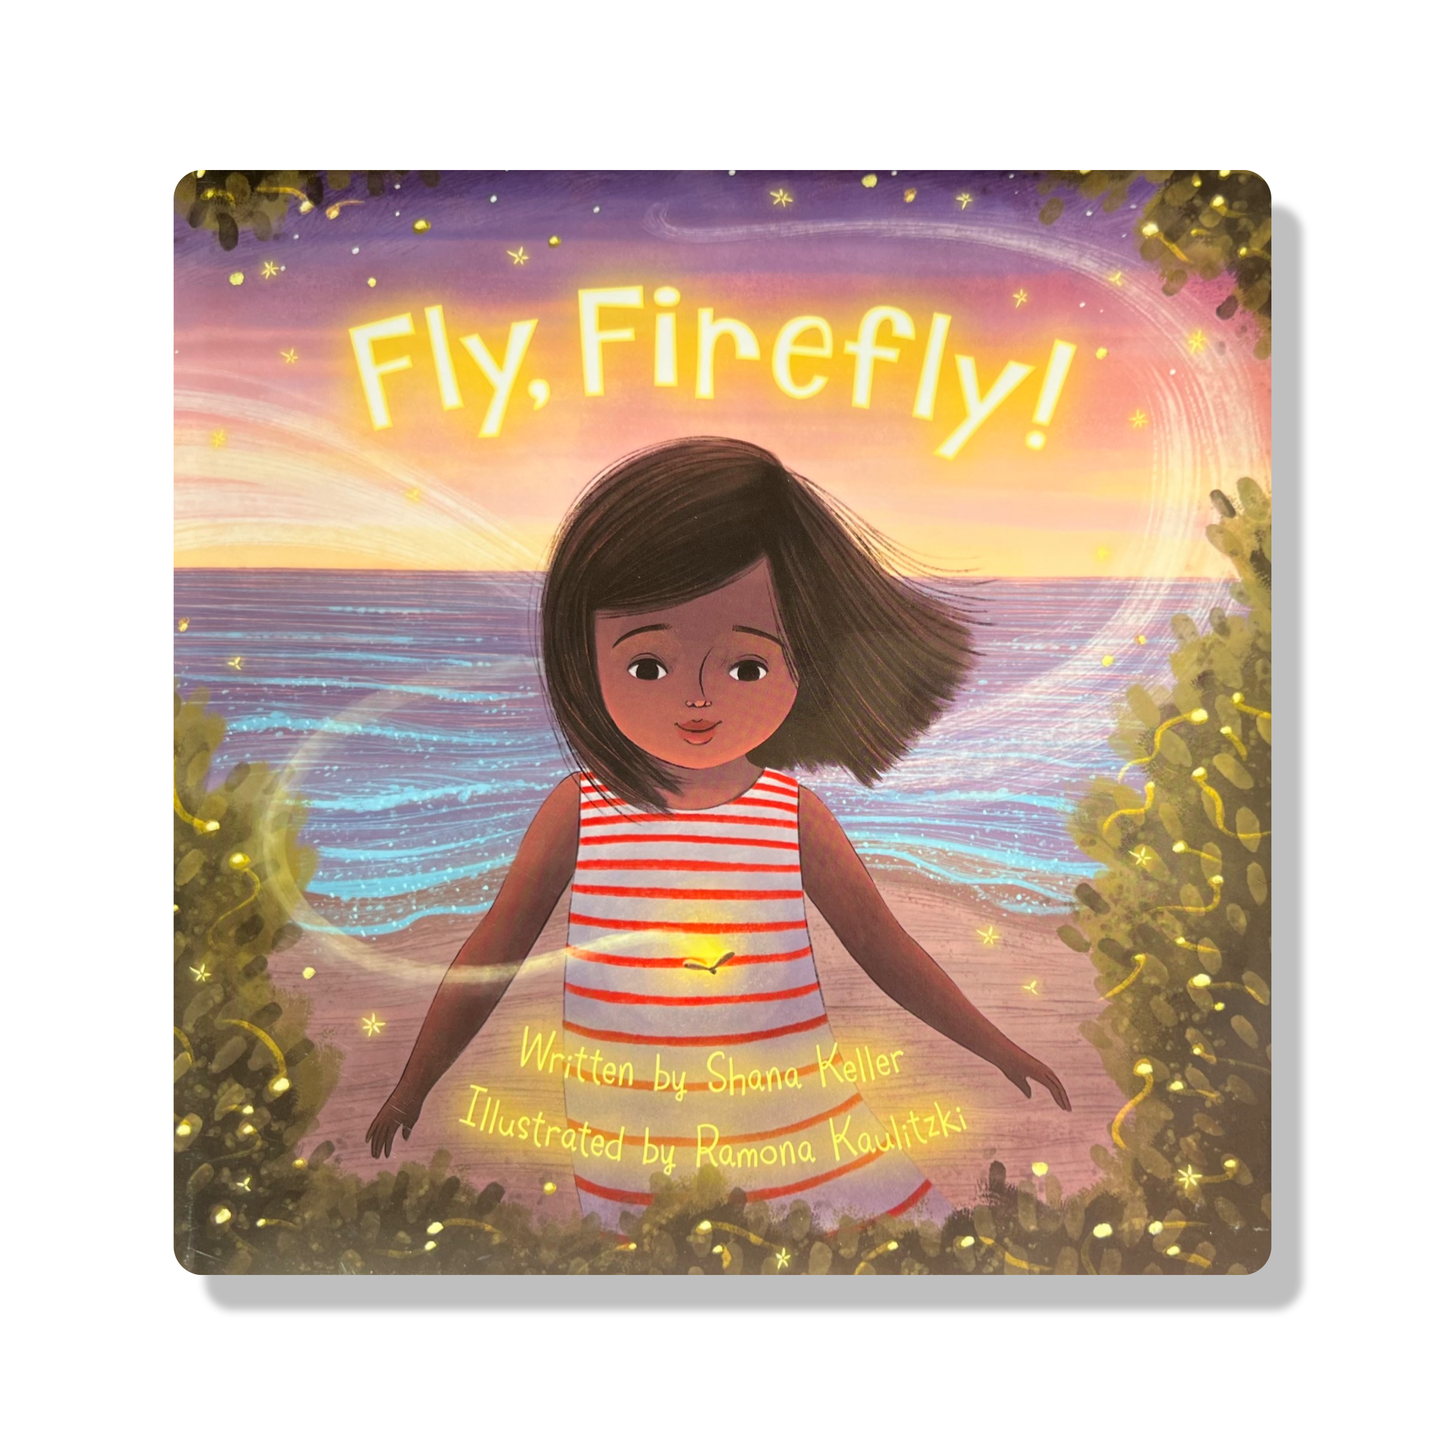 Fly, Firefly!